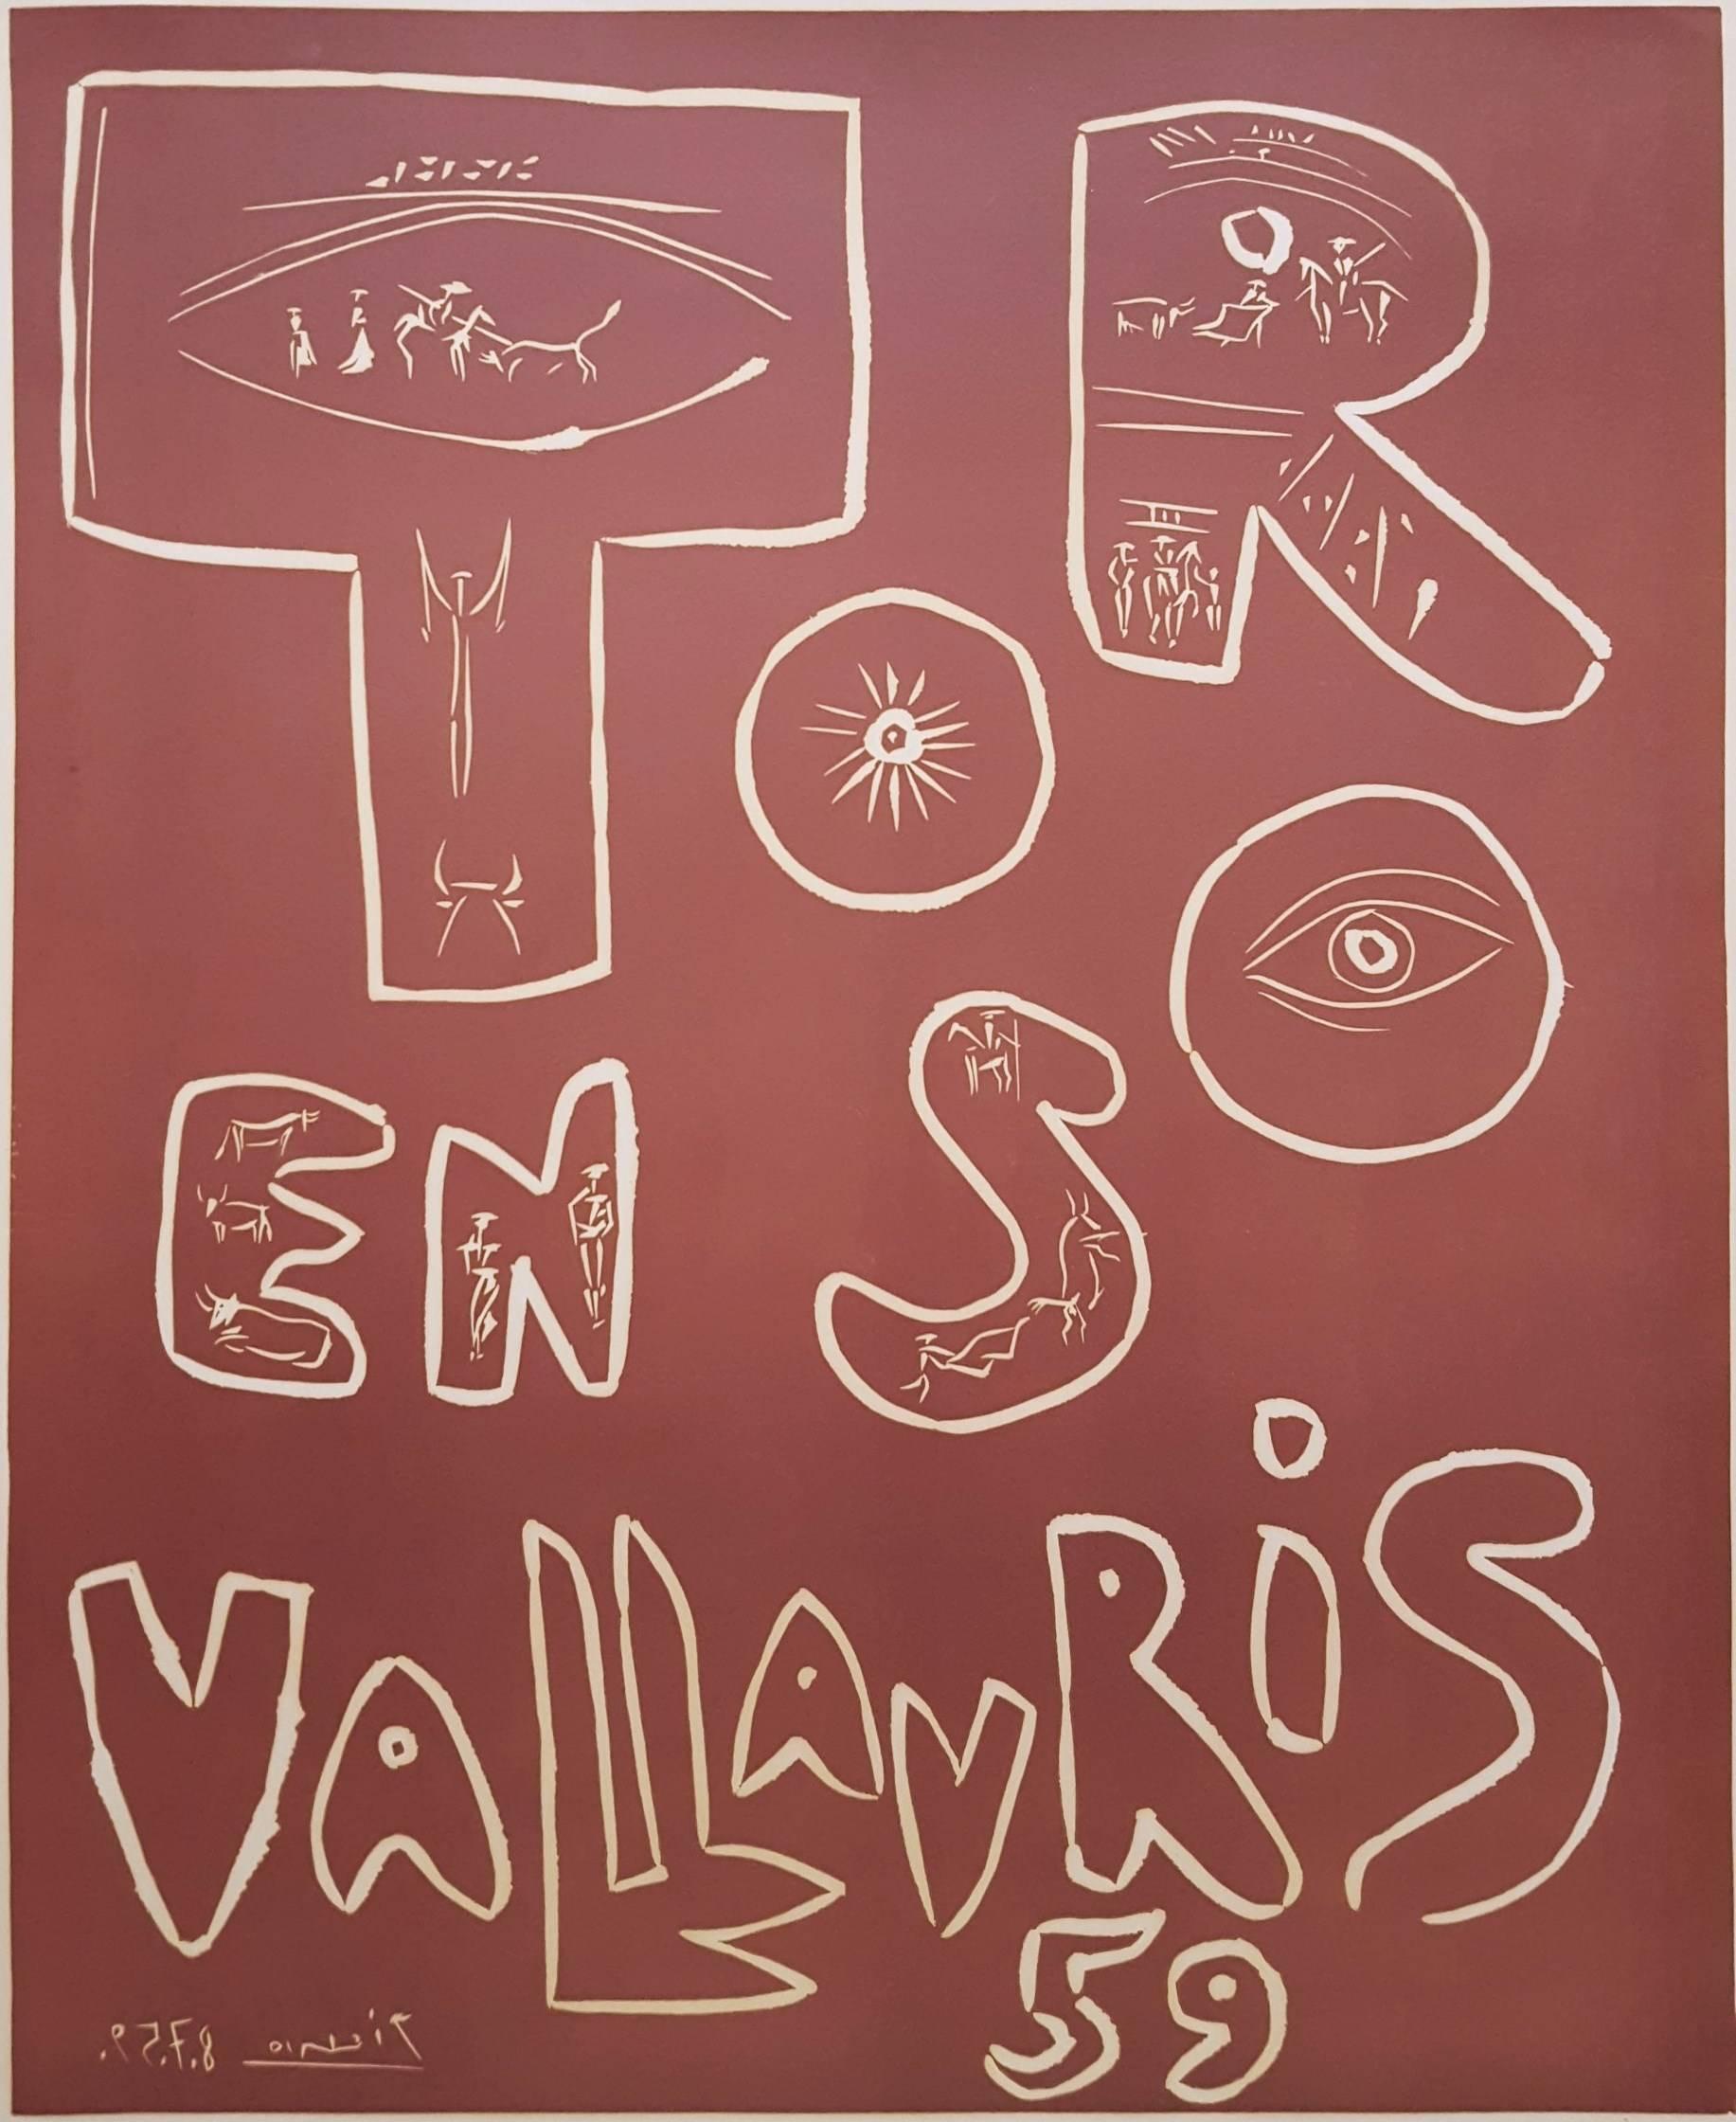 Pablo Picasso Animal Print – Toros und Vallauris